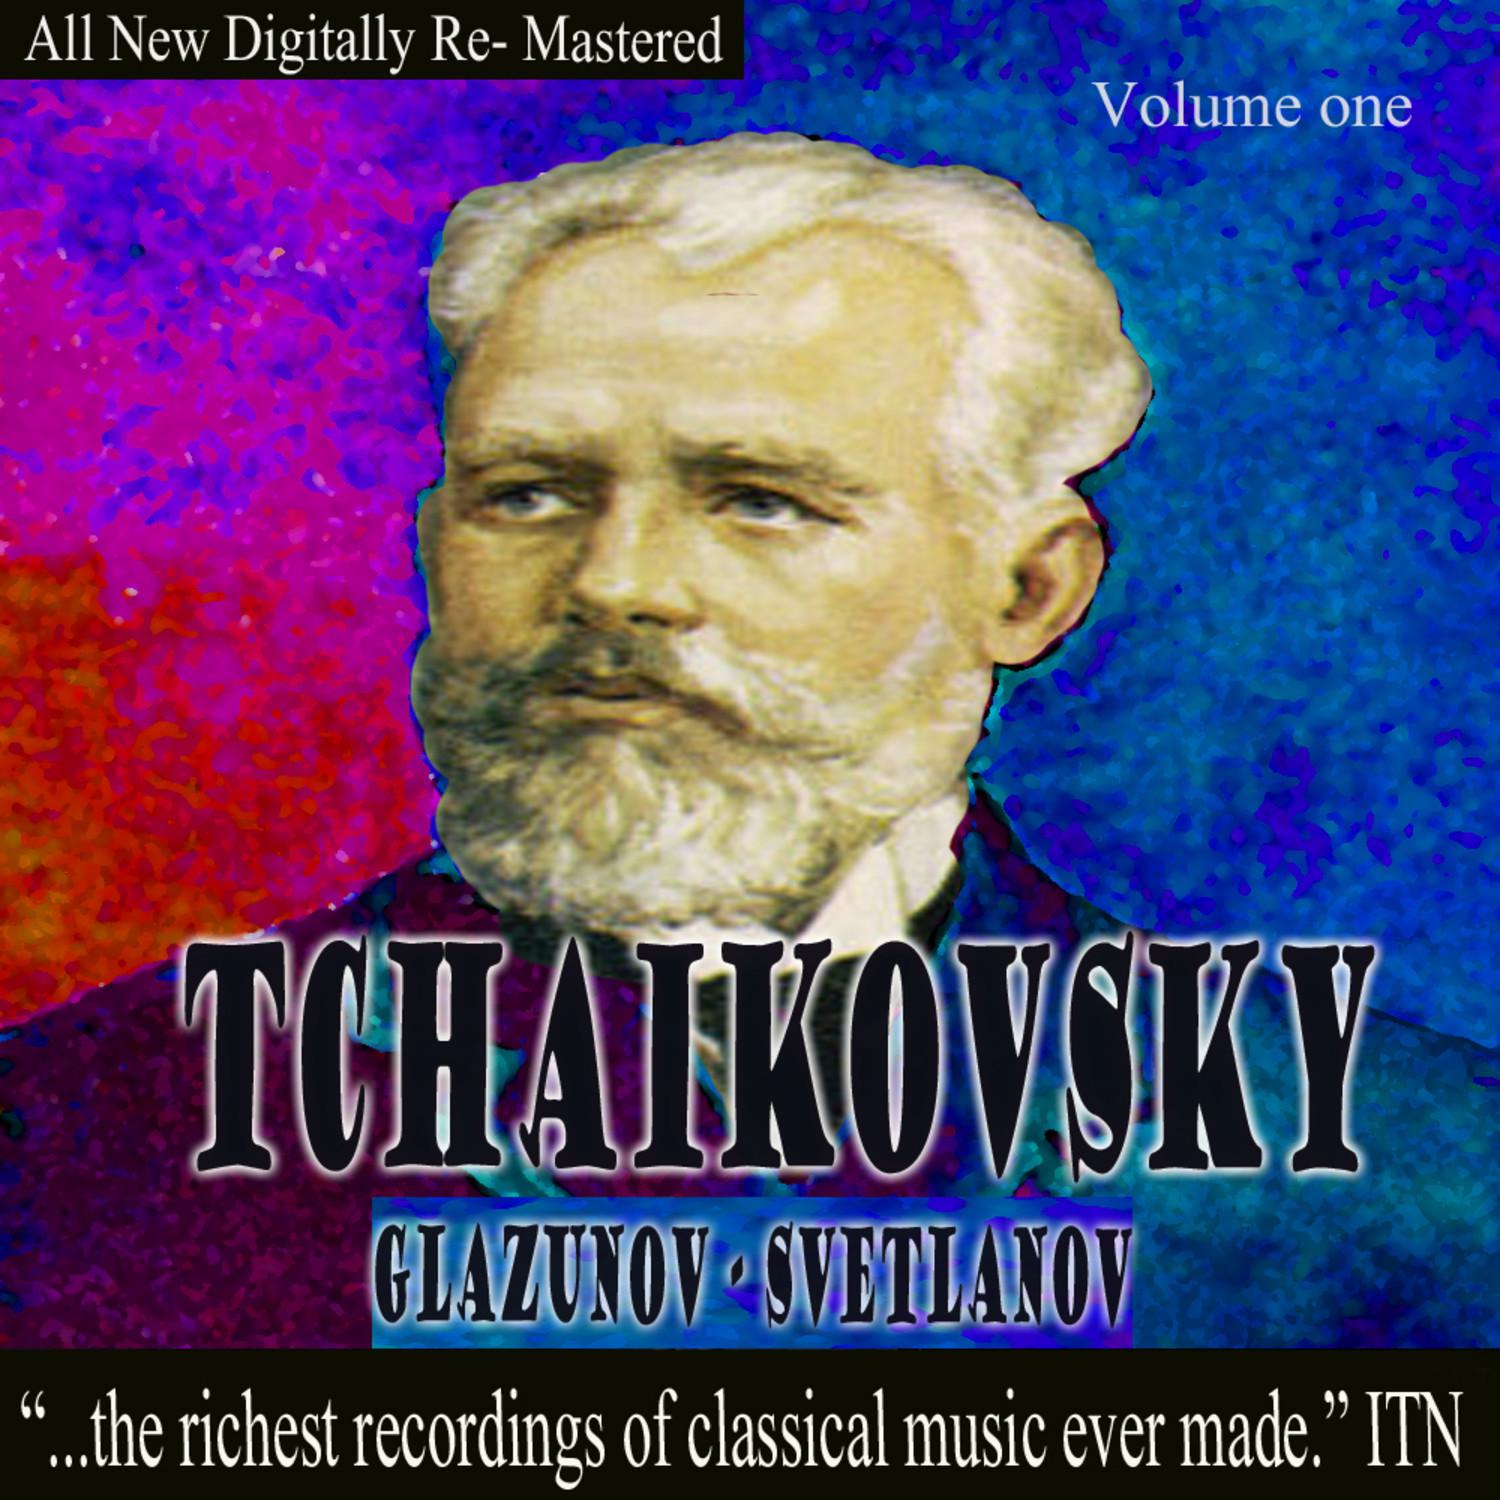 Tchaikovsky, Glazunov, Svetlanov Volume One